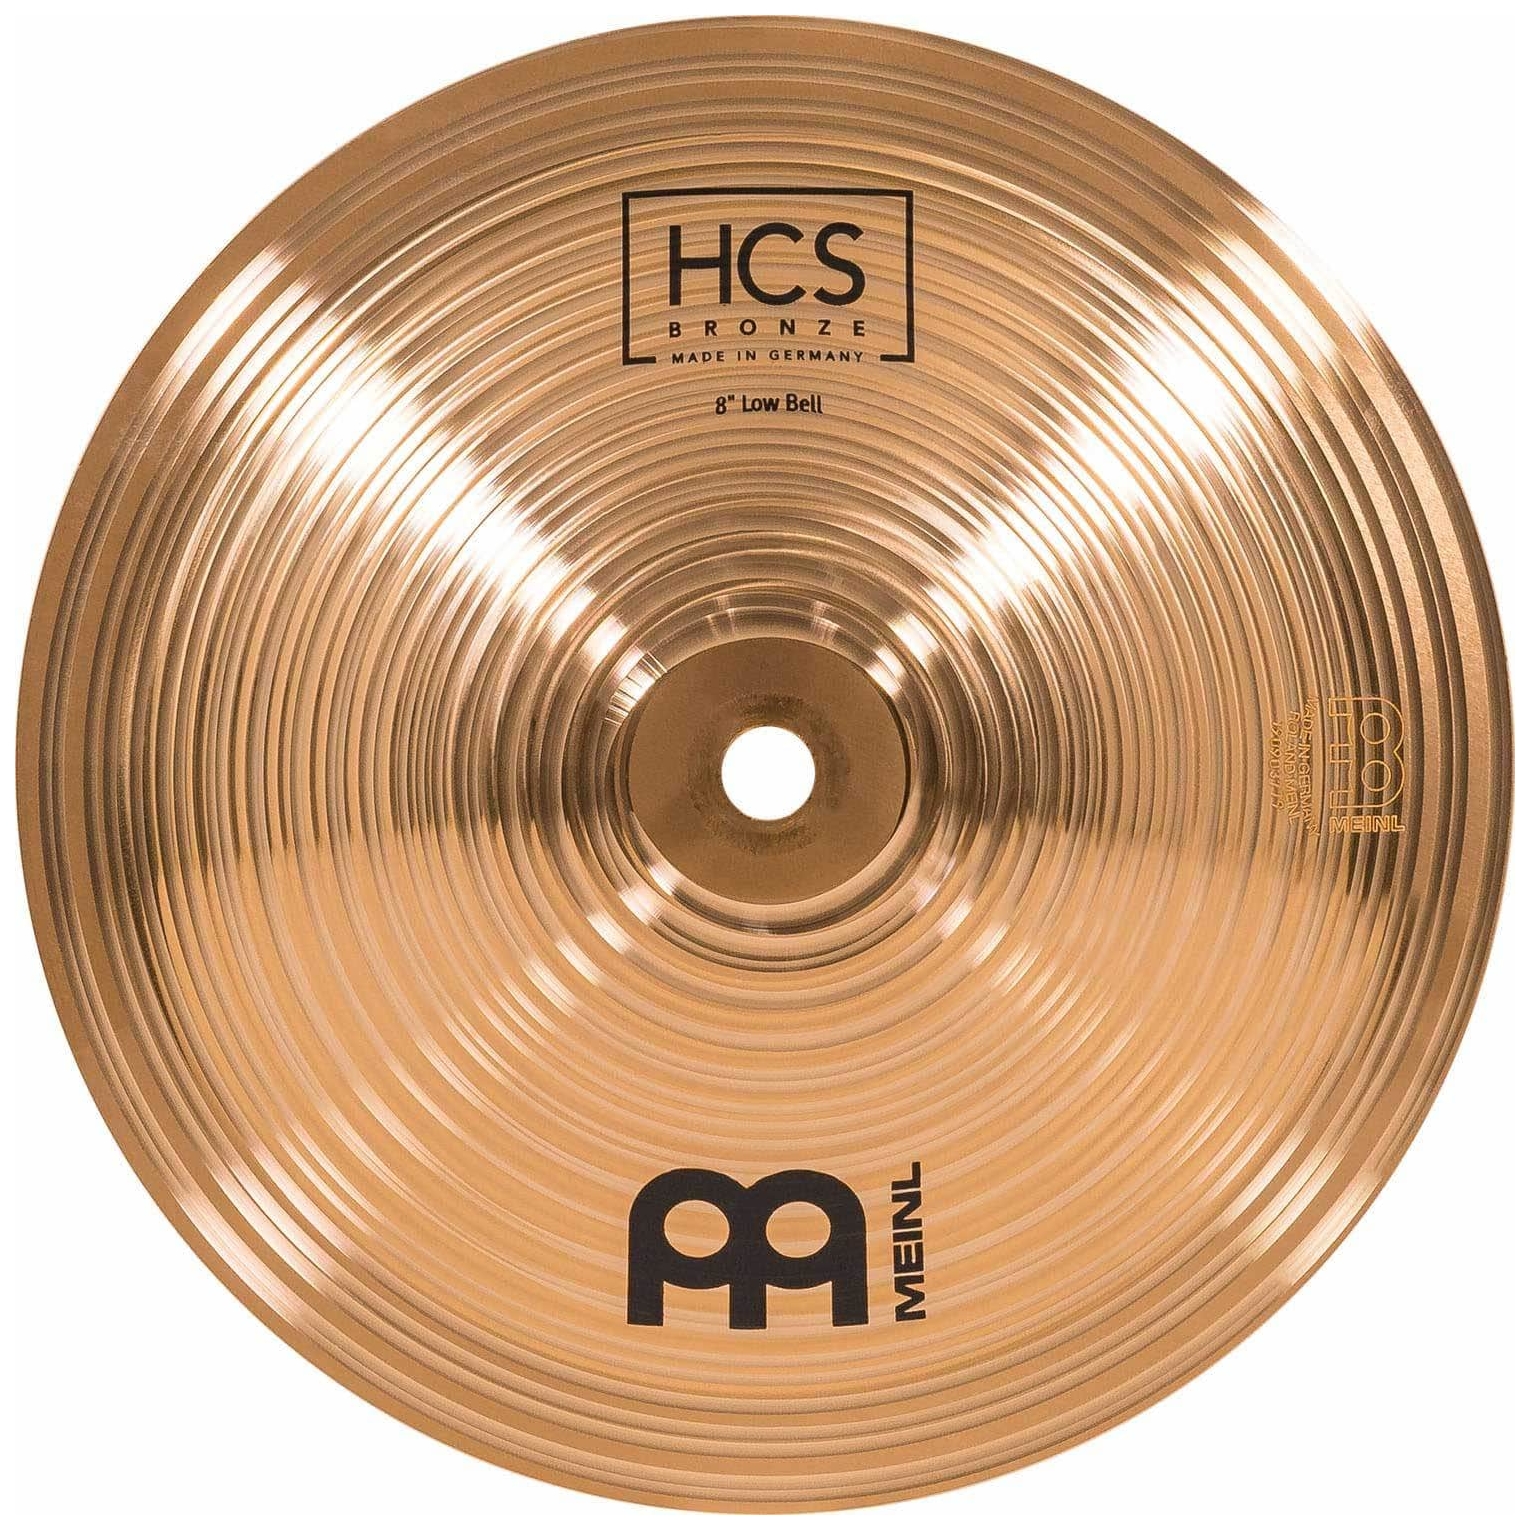 Meinl Cymbals HCSB8BL - 8" HCS Bronze Low Bell 